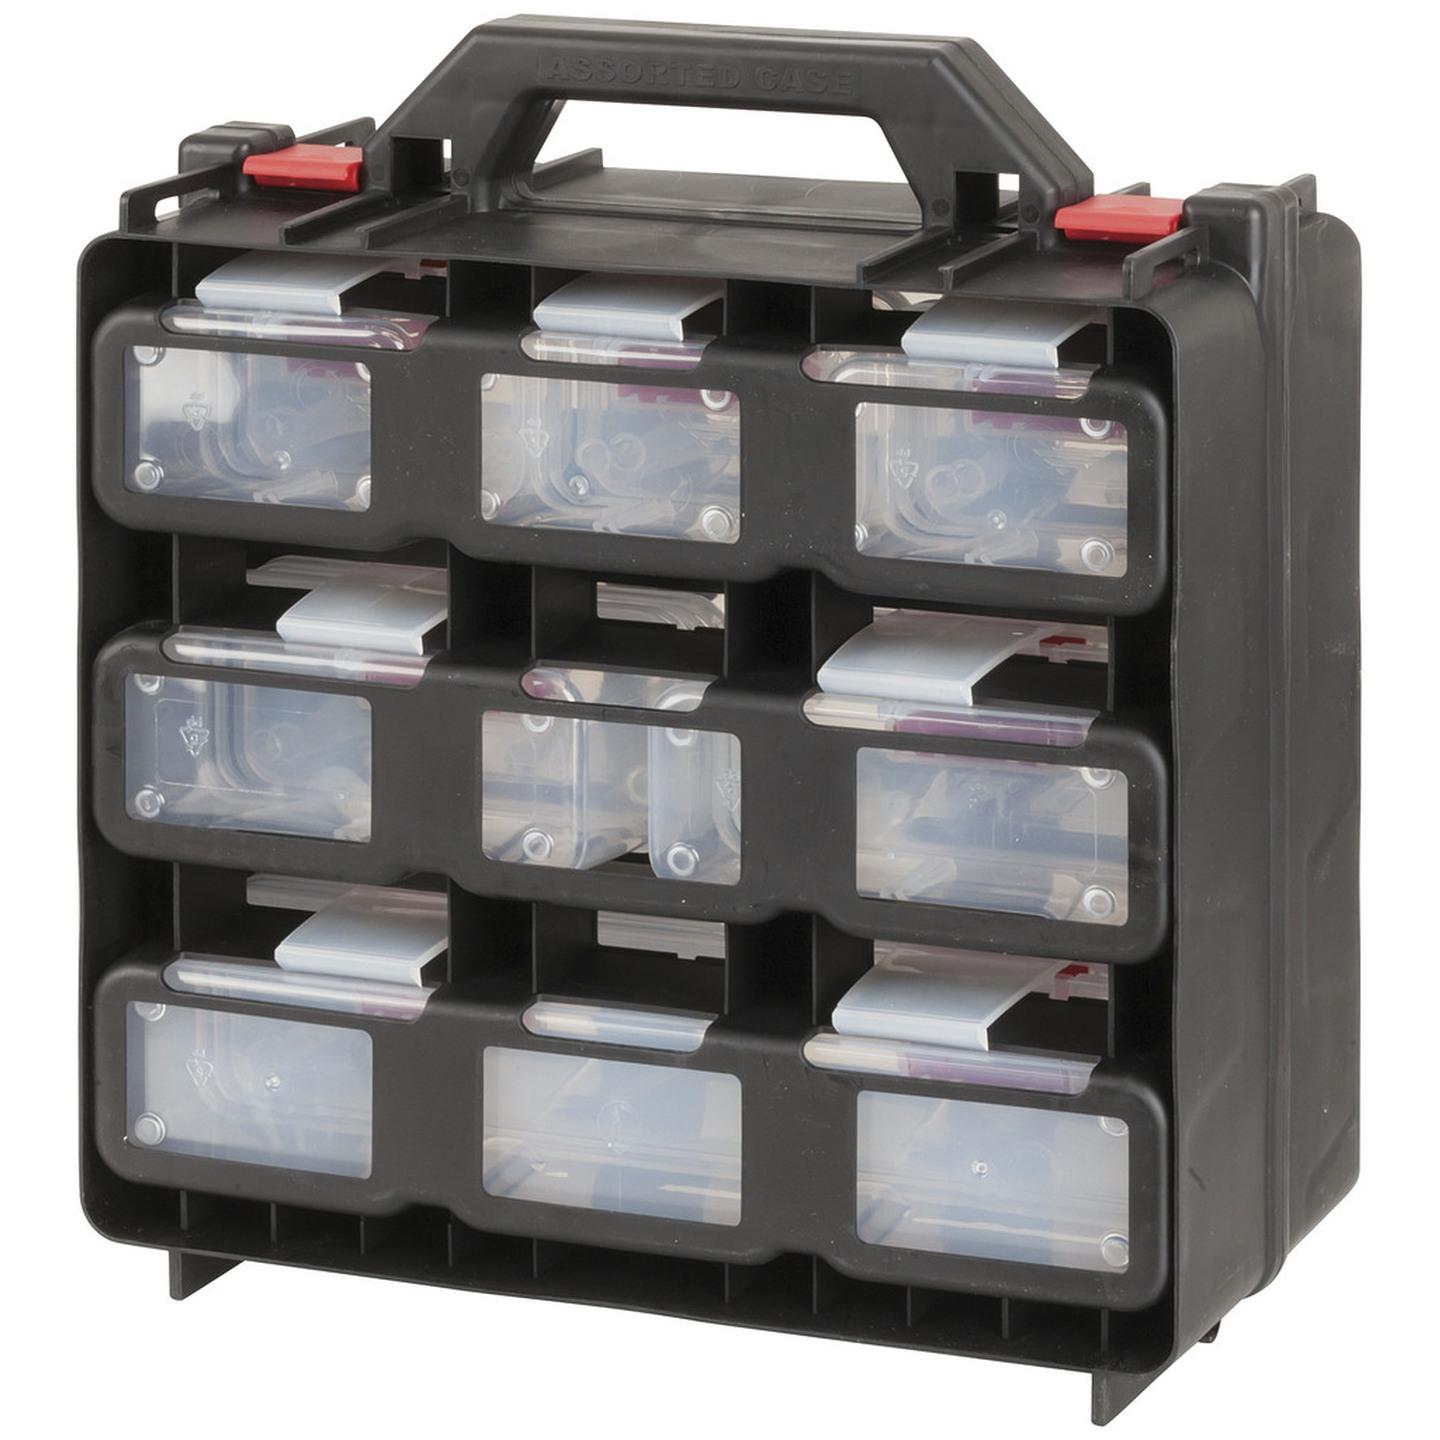 Portable 12 Compartment Storage Cabinet